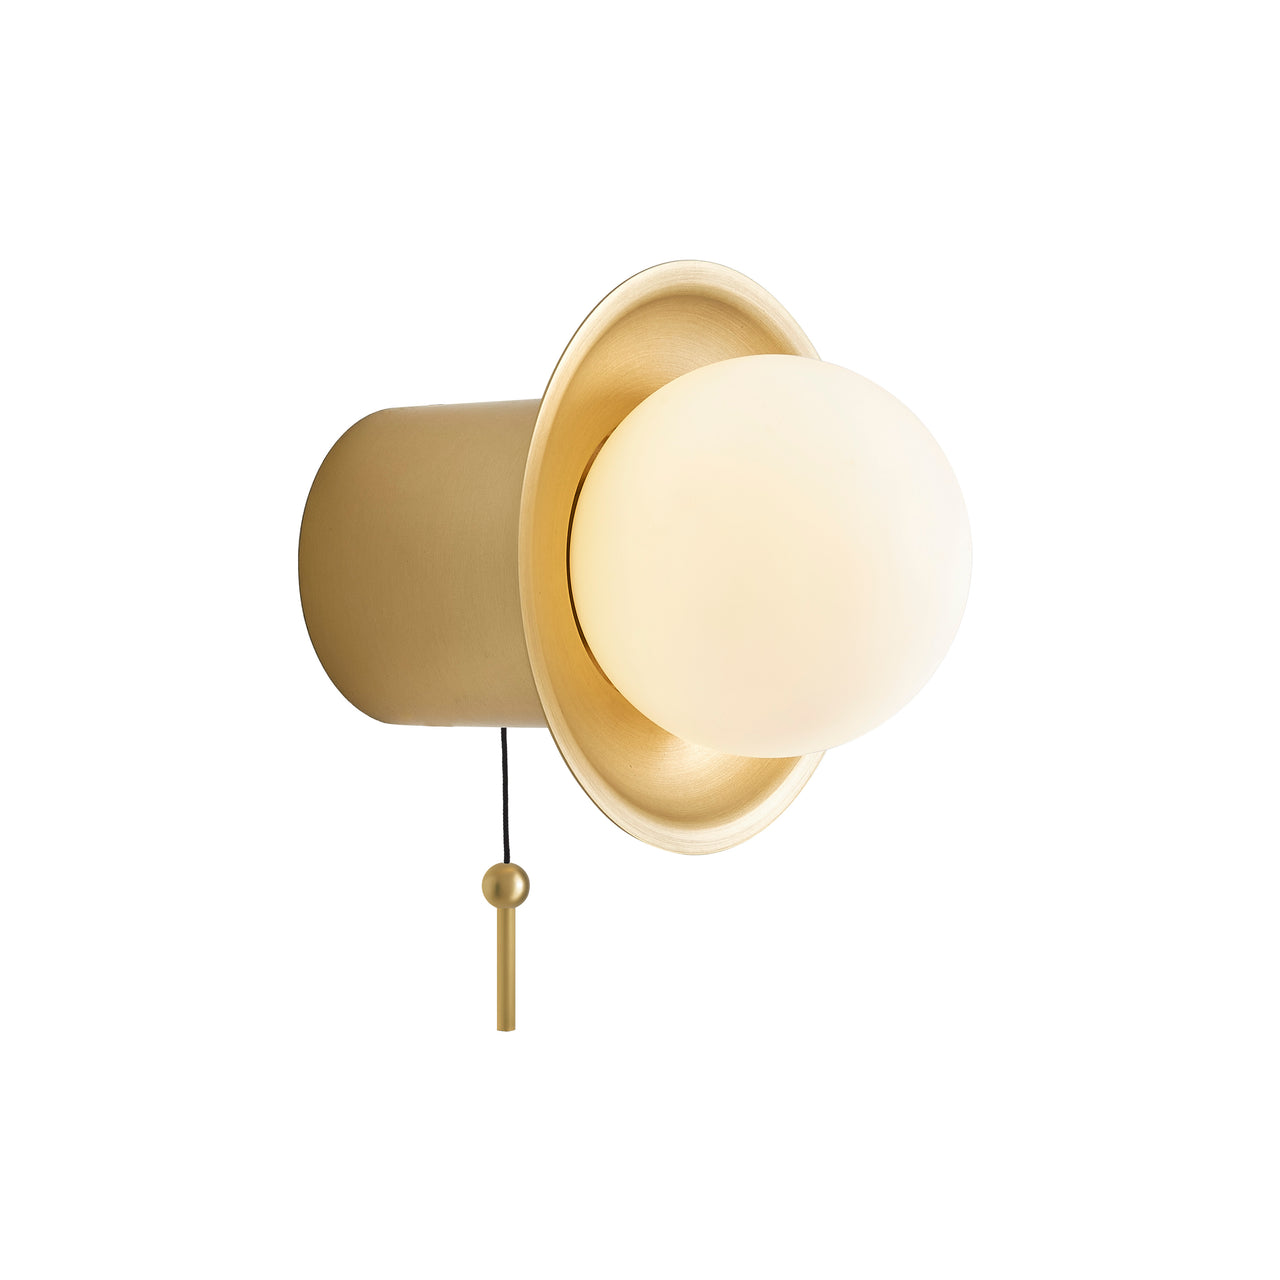 Janed Wall Light with Cord: Satin Brass + Satin Brass